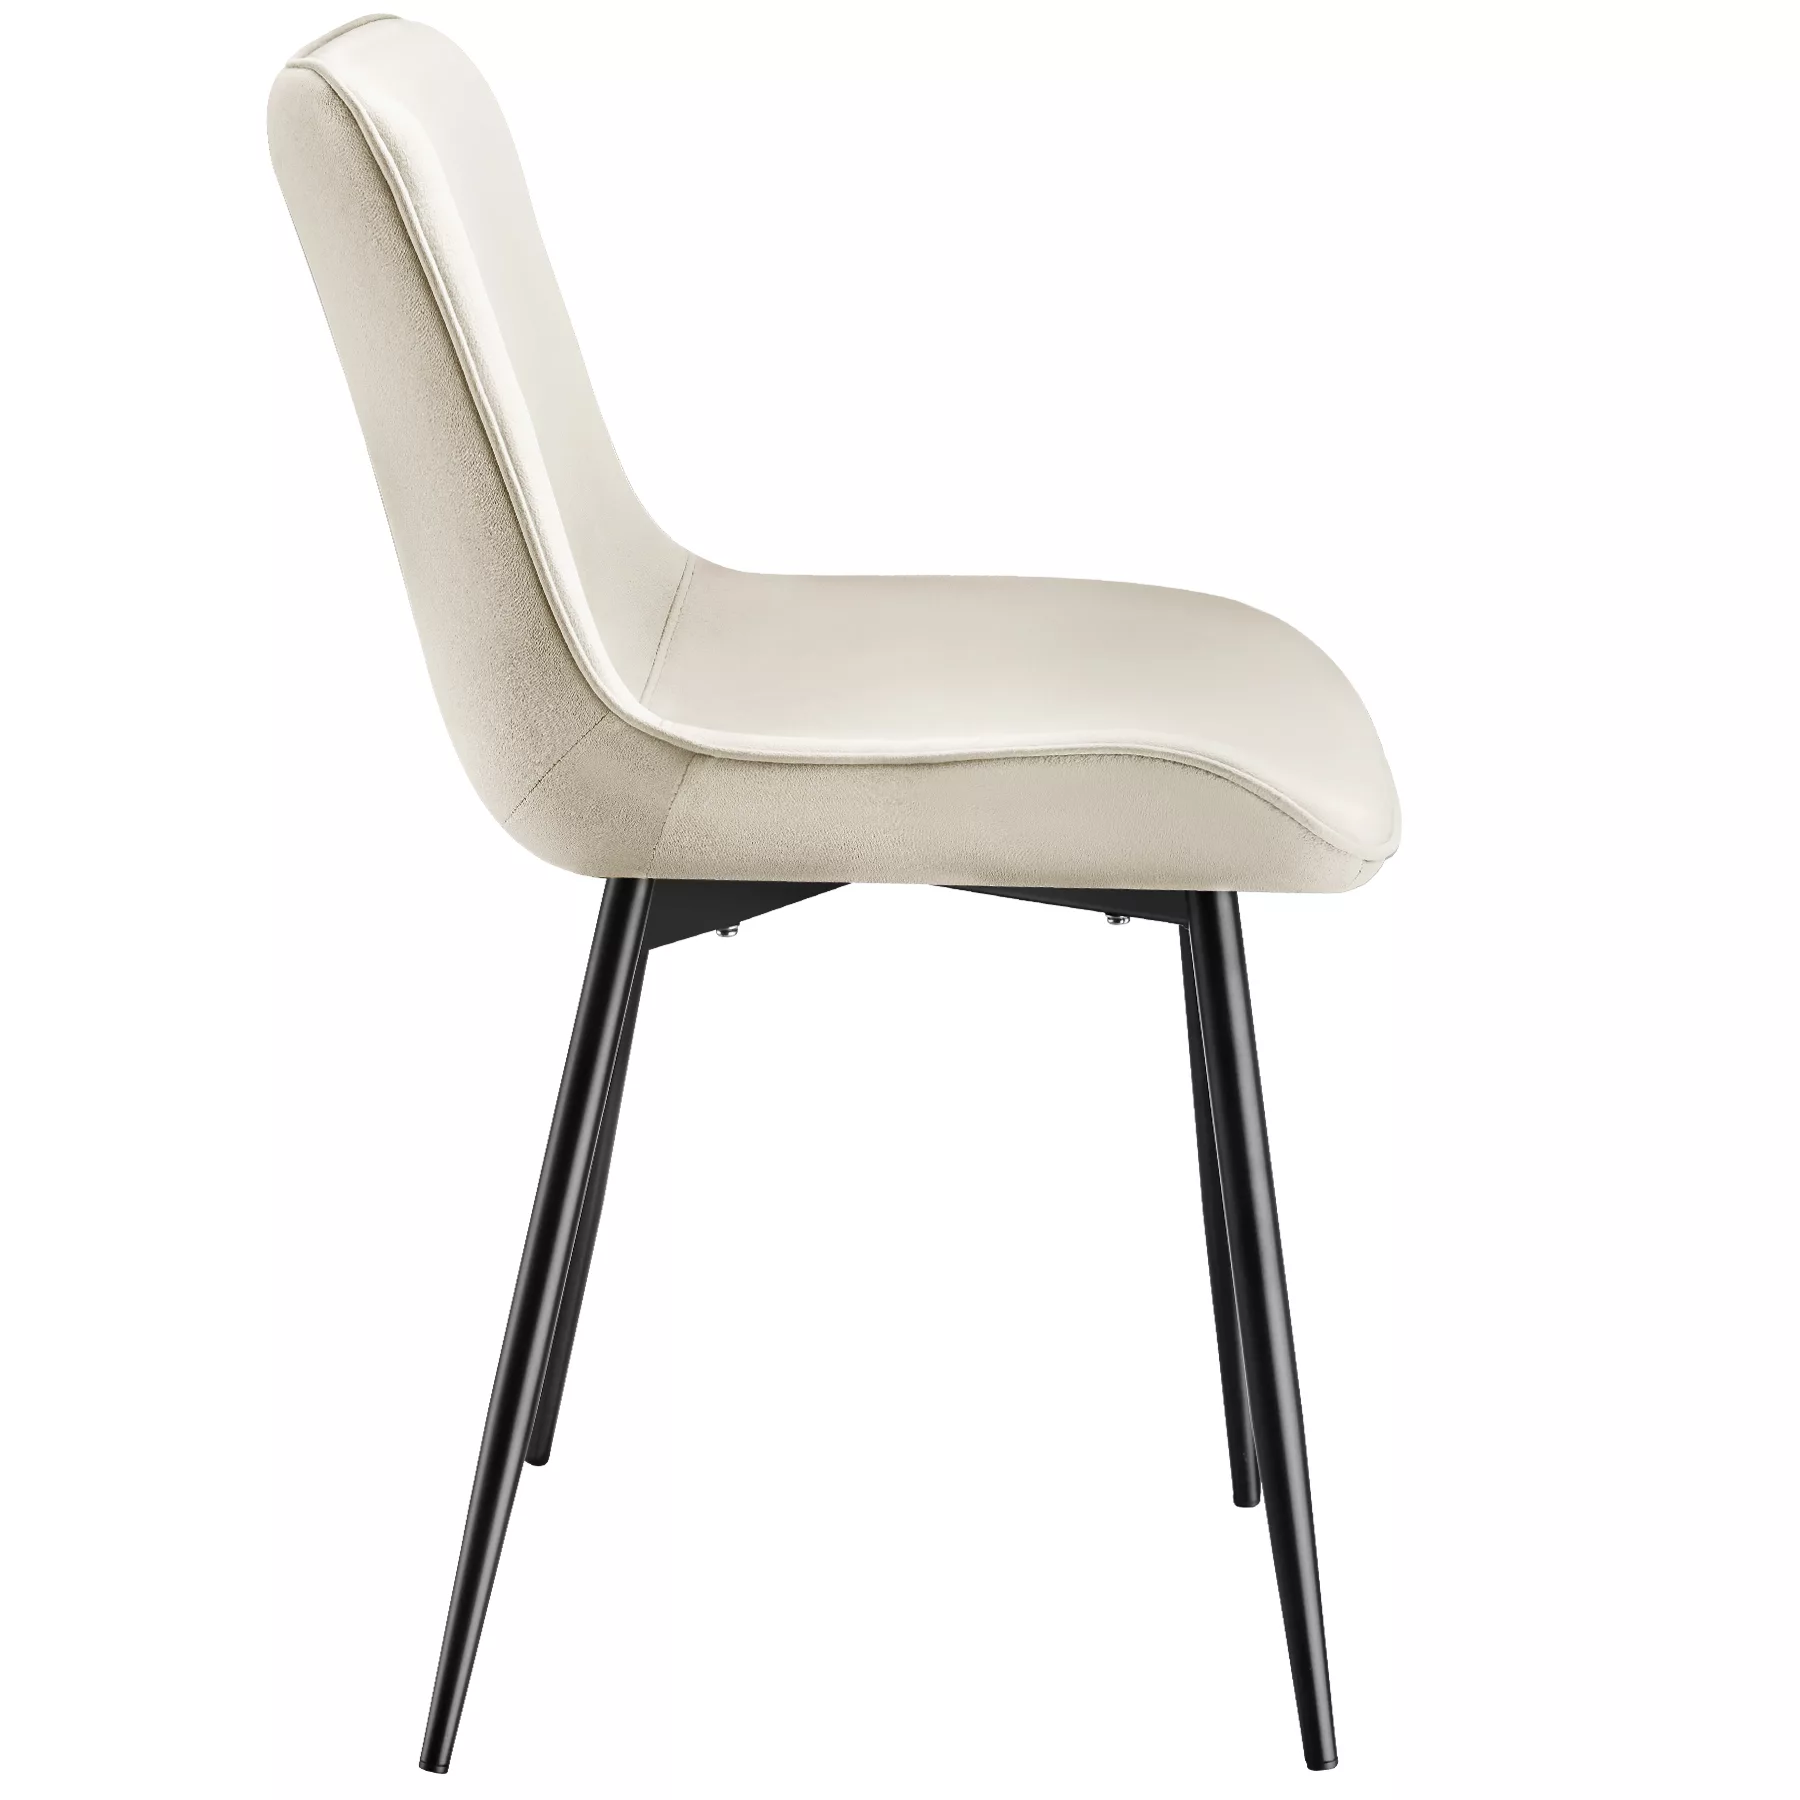 8er Set Stuhl Monroe Samtoptik - creme günstig online kaufen